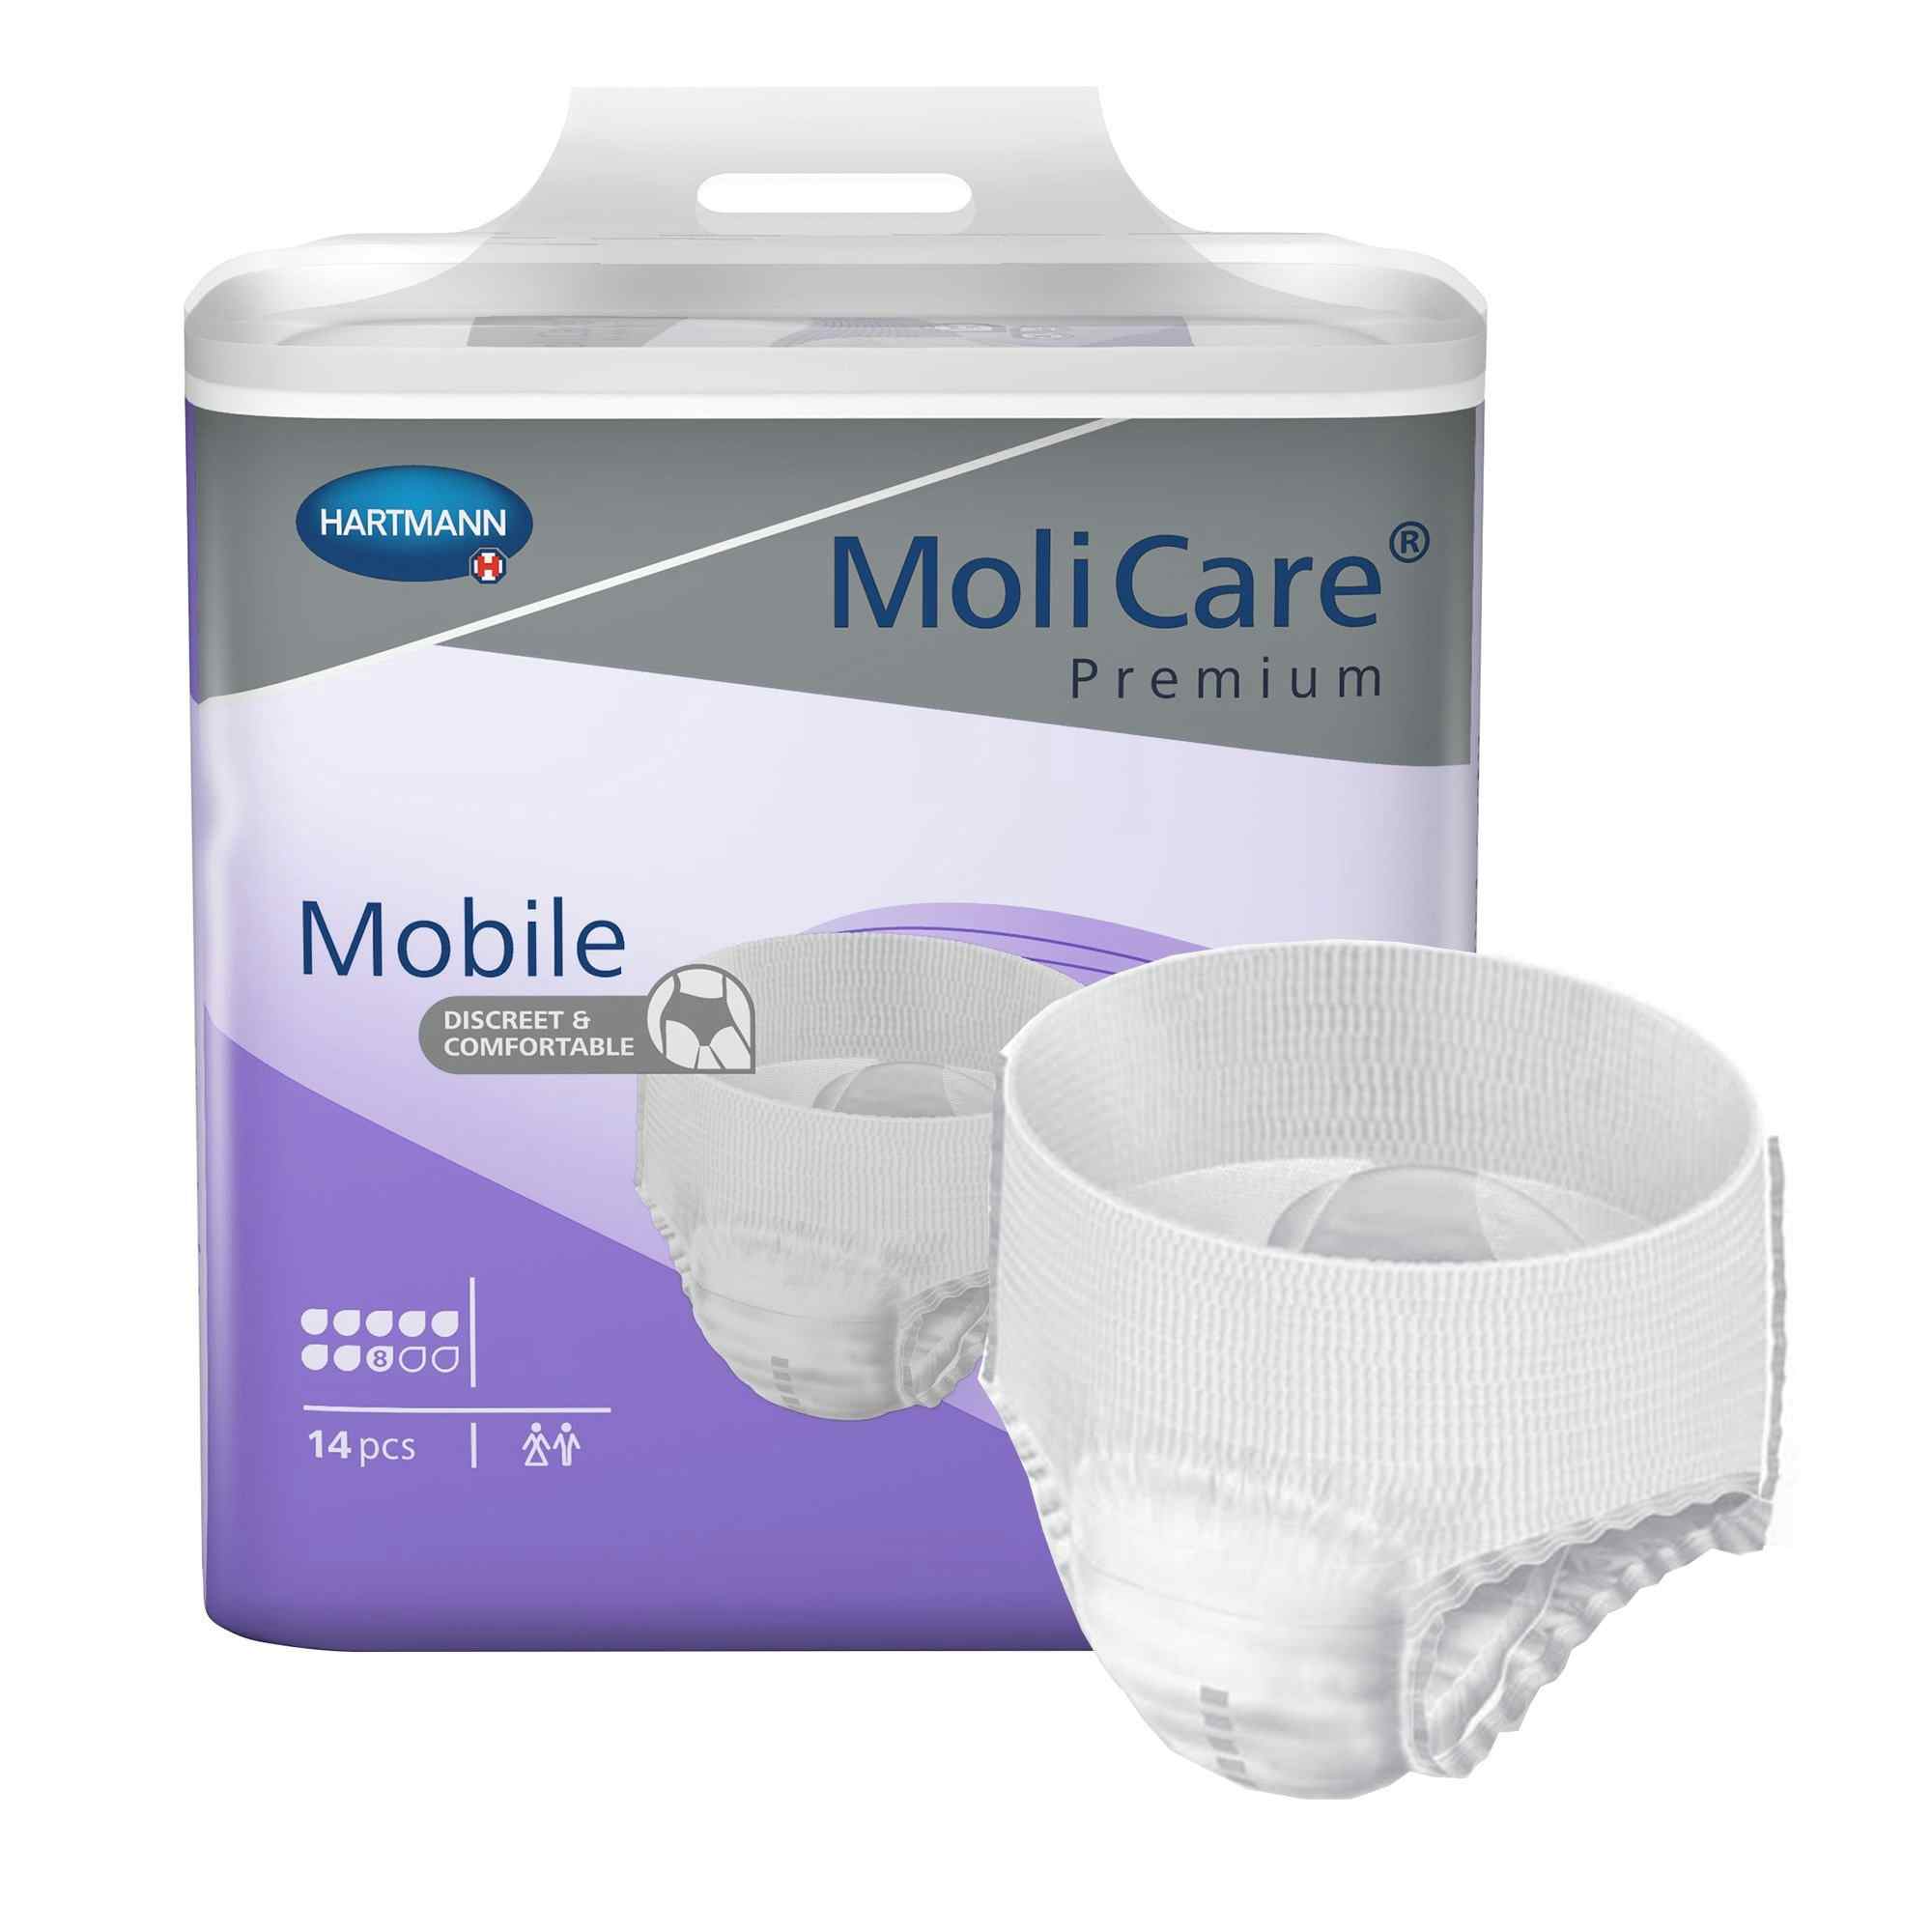 MoliCare Premium Mobile Pull-Up Underwear, 8 Drops Heavy Absorbency, 915872, Medium (31-47") - Case of 42